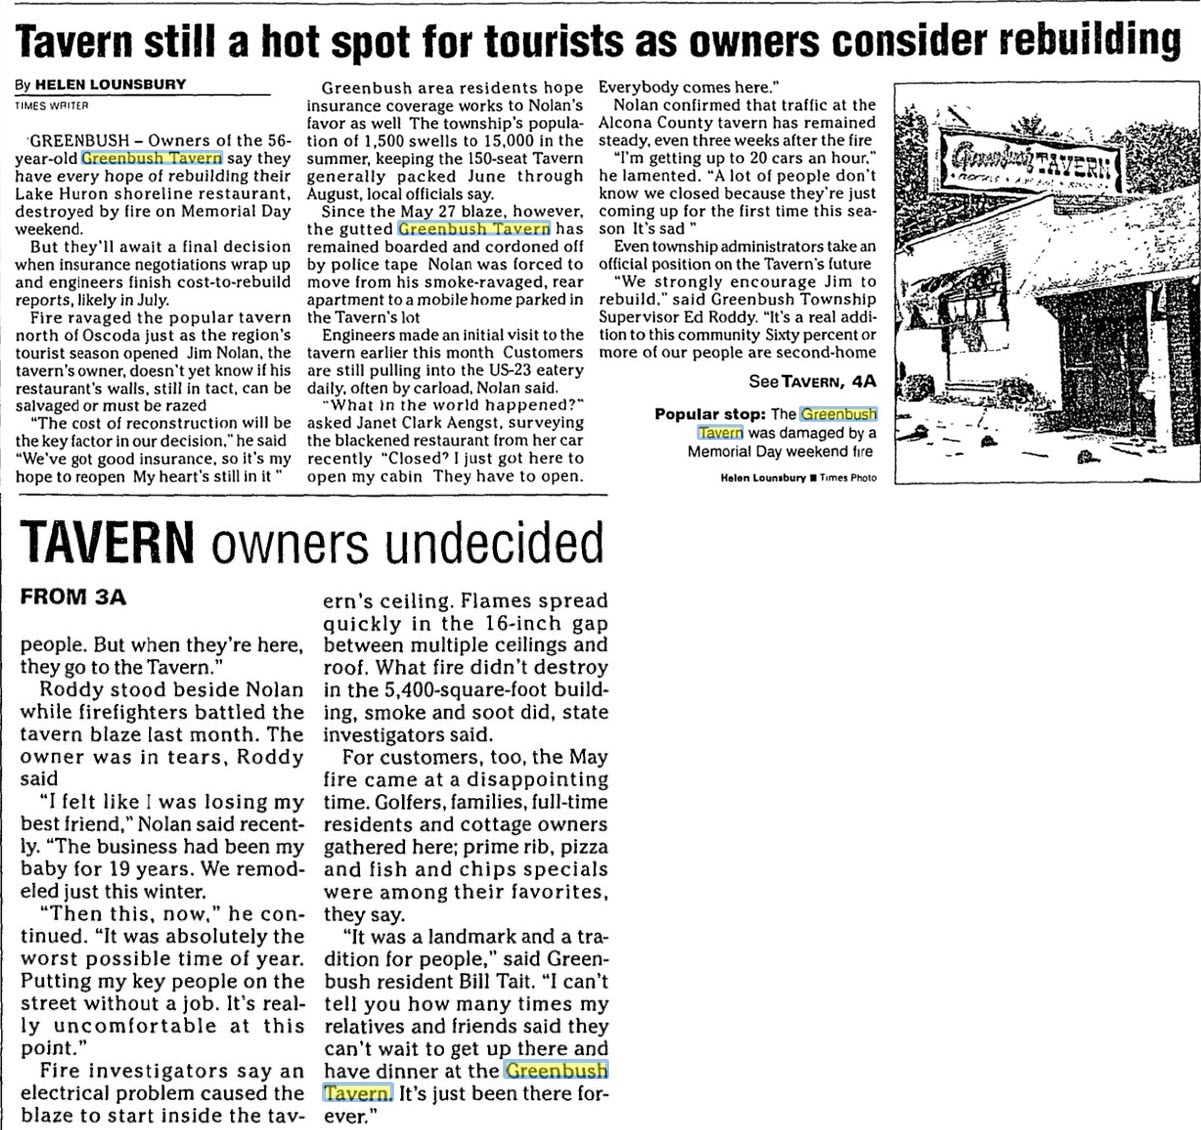 Greenbush Tavern - June 2006 Article On Fire